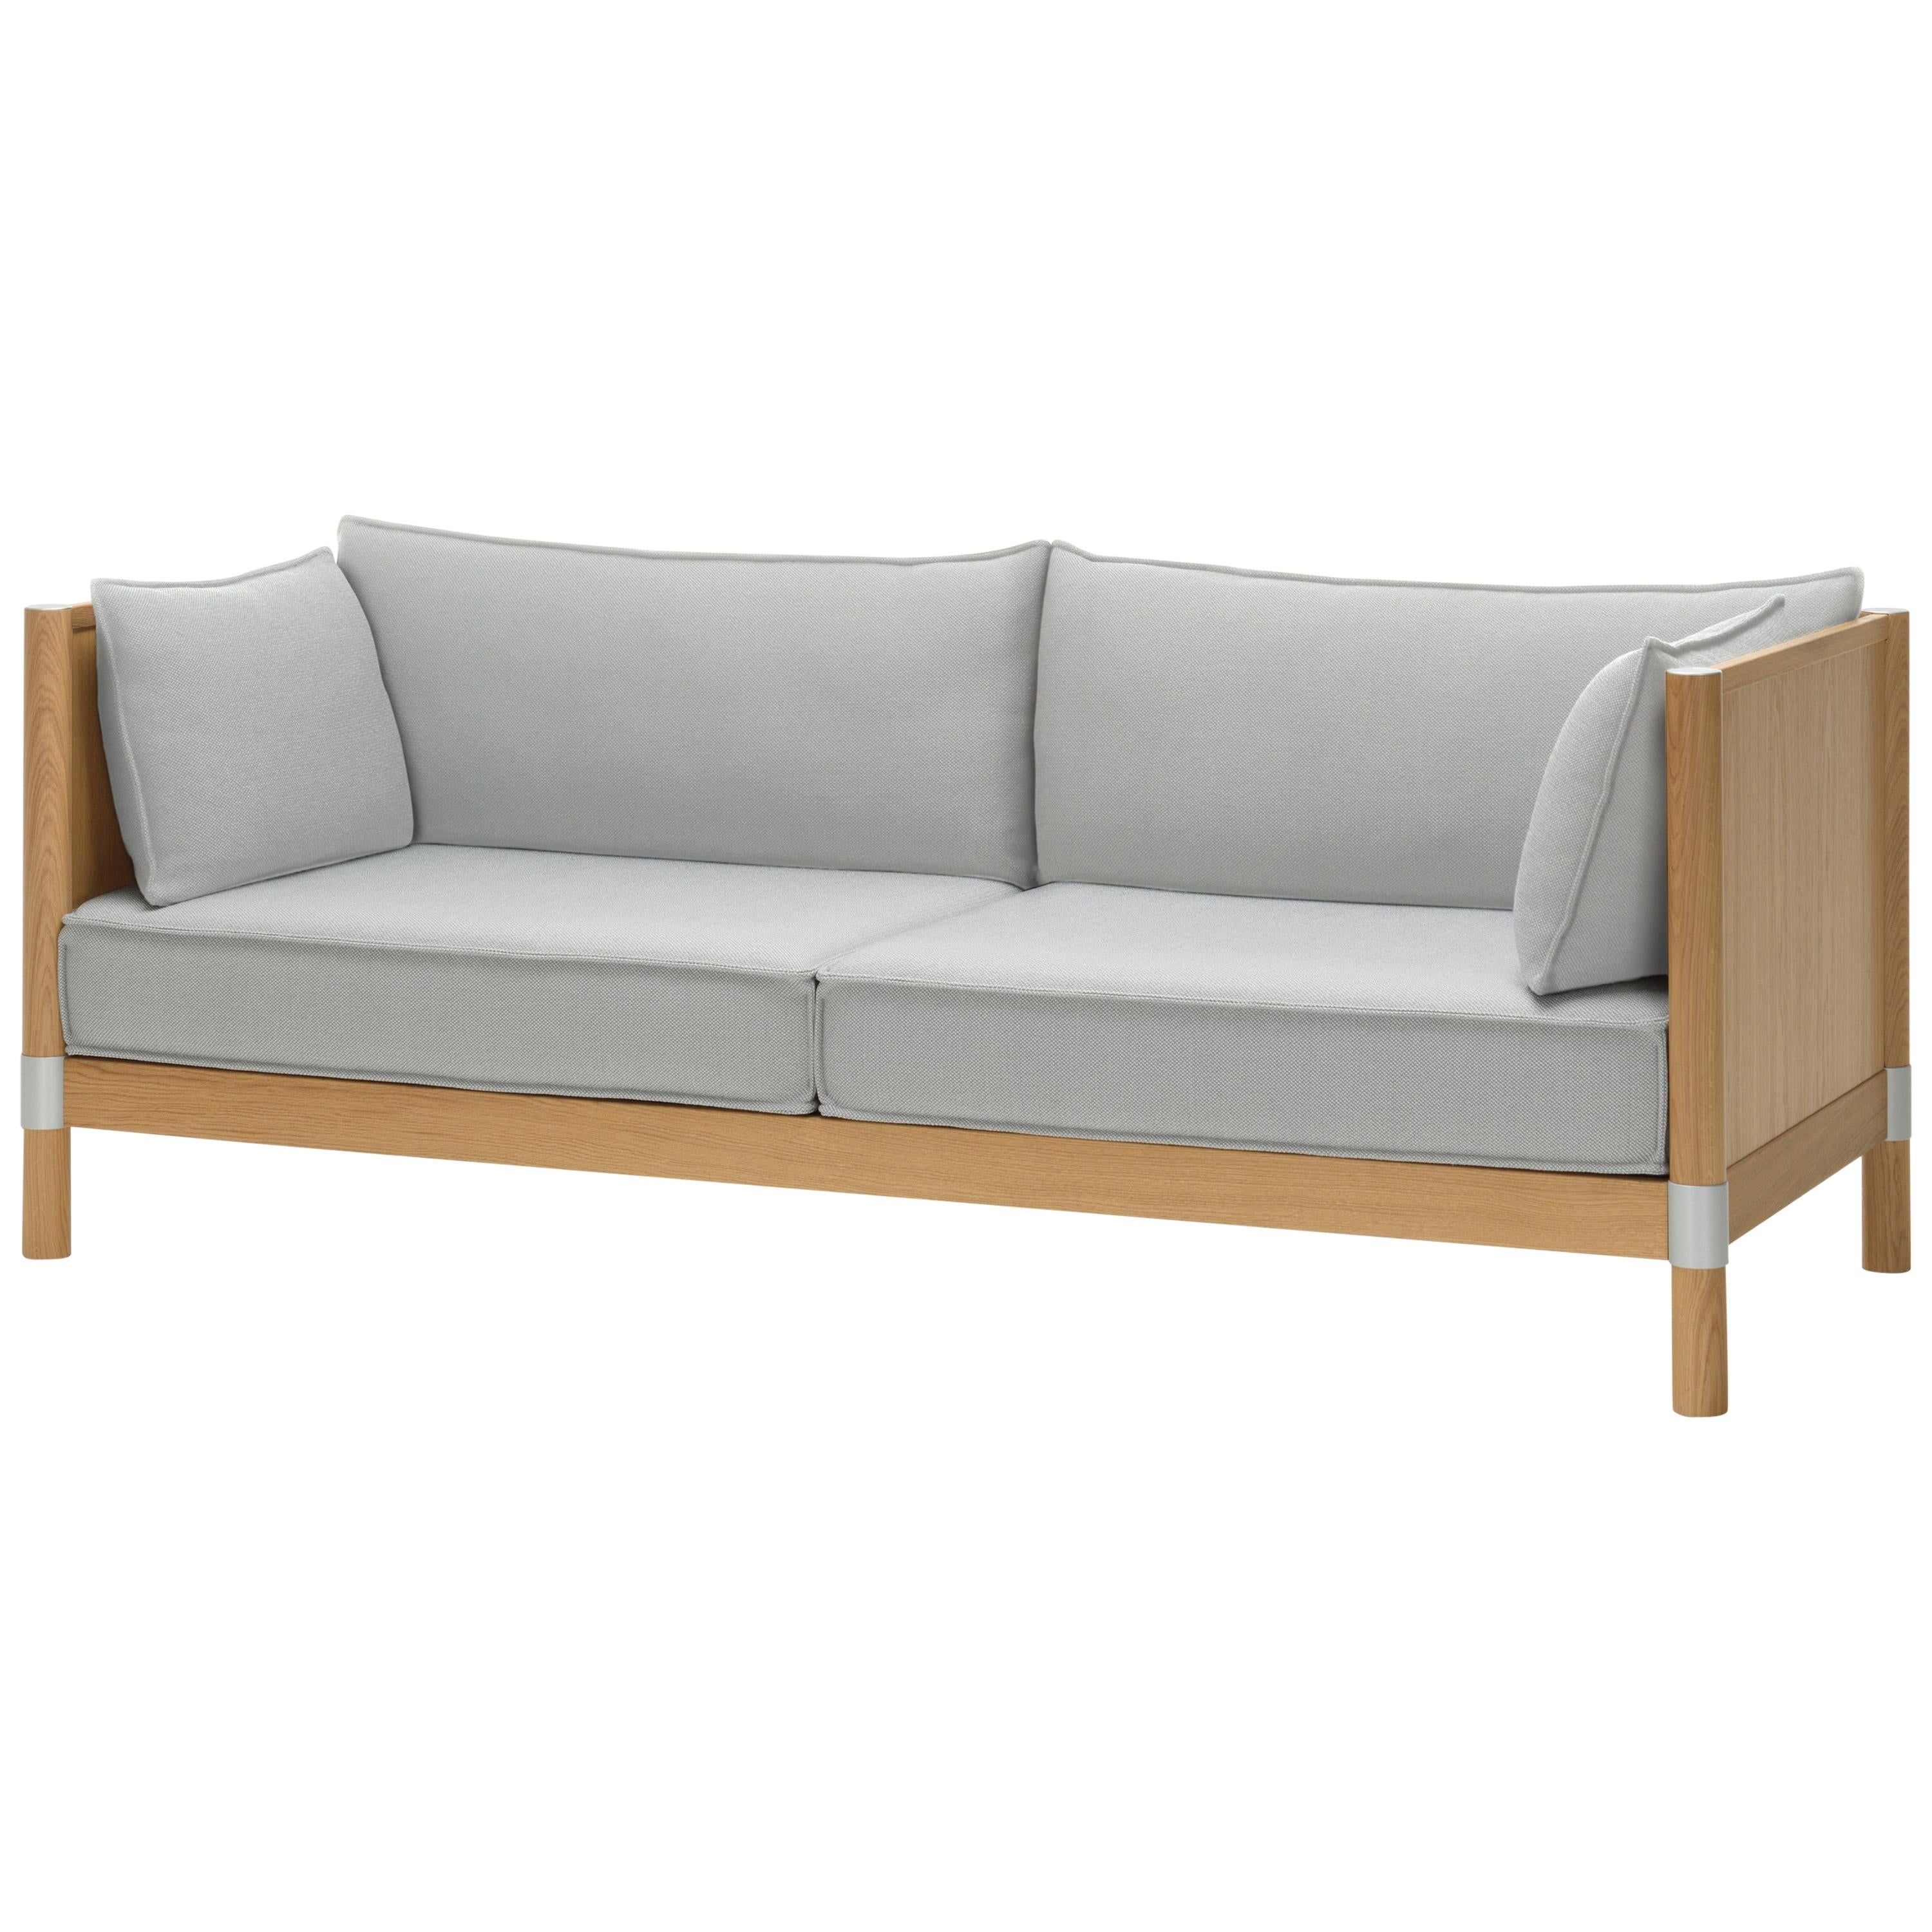 Vitra Cyl Wood Sofa in Cream & Sierra Grey Plano by Ronan & Erwan Bouroullec im Angebot